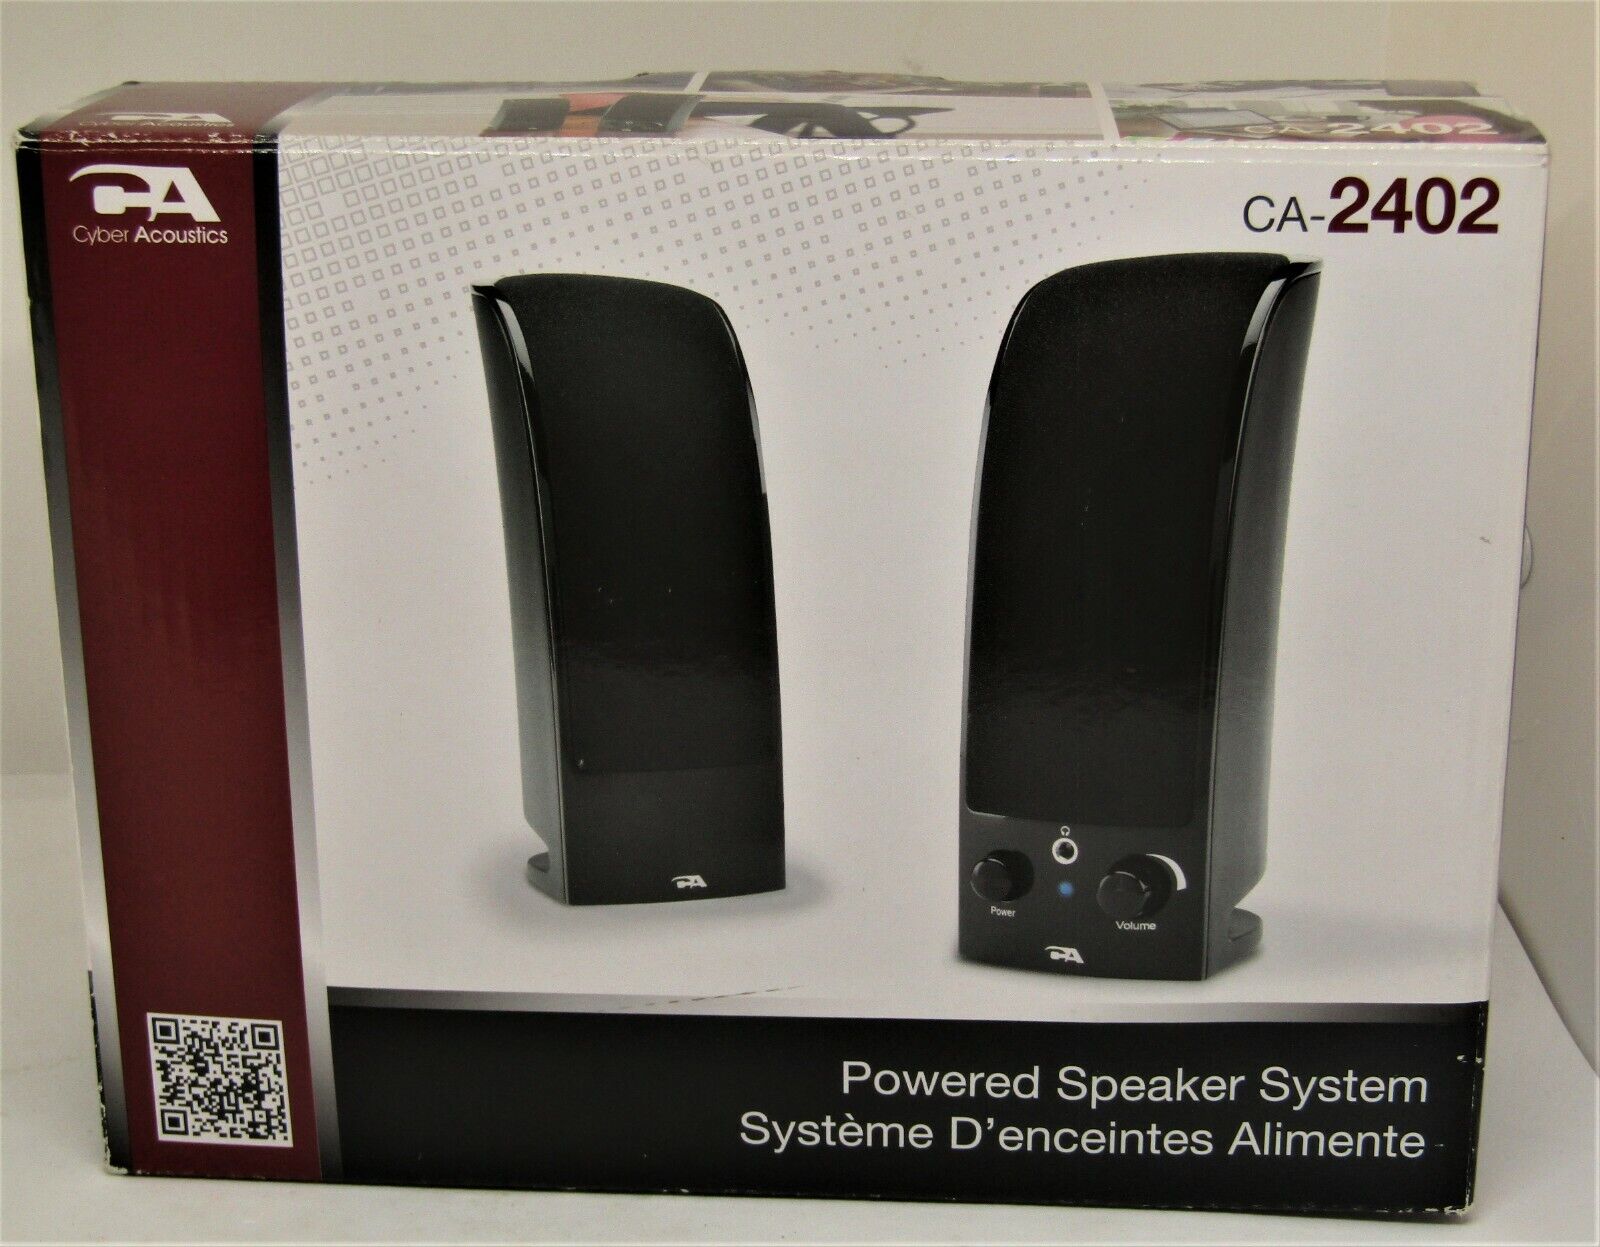 Cyber Acoustics CA-2402 Multimedia Desktop Computer Speakers for PC Laptop Use